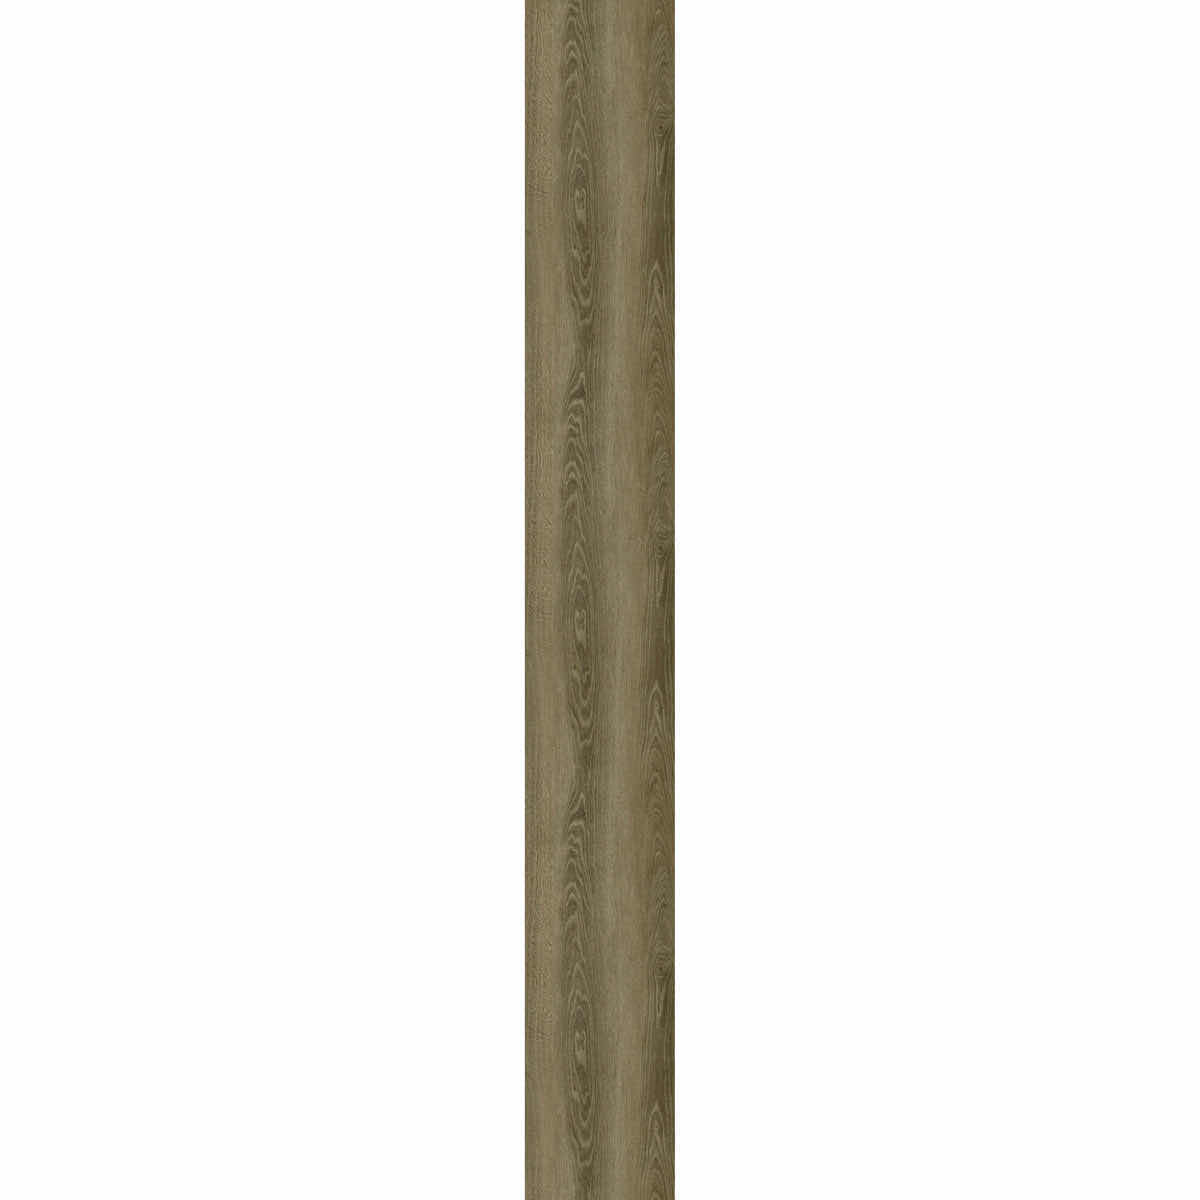 Photo 1 of MOHAWK VIVID STEP BEARY BROWN WOOD FINISH GLUE DOWN VINYL PLANK FLOORING 6” X 48” (54sqft PER CASE/2CASES APPROX. 108sqft TOTAL)